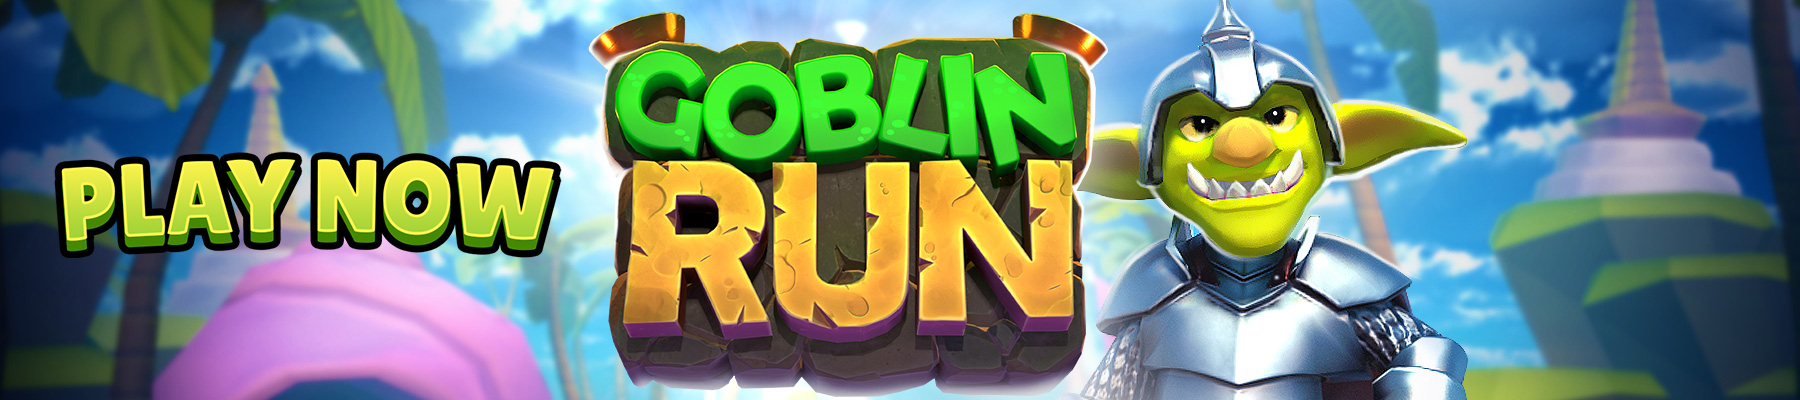 Hozir Goblin Run oʻynang